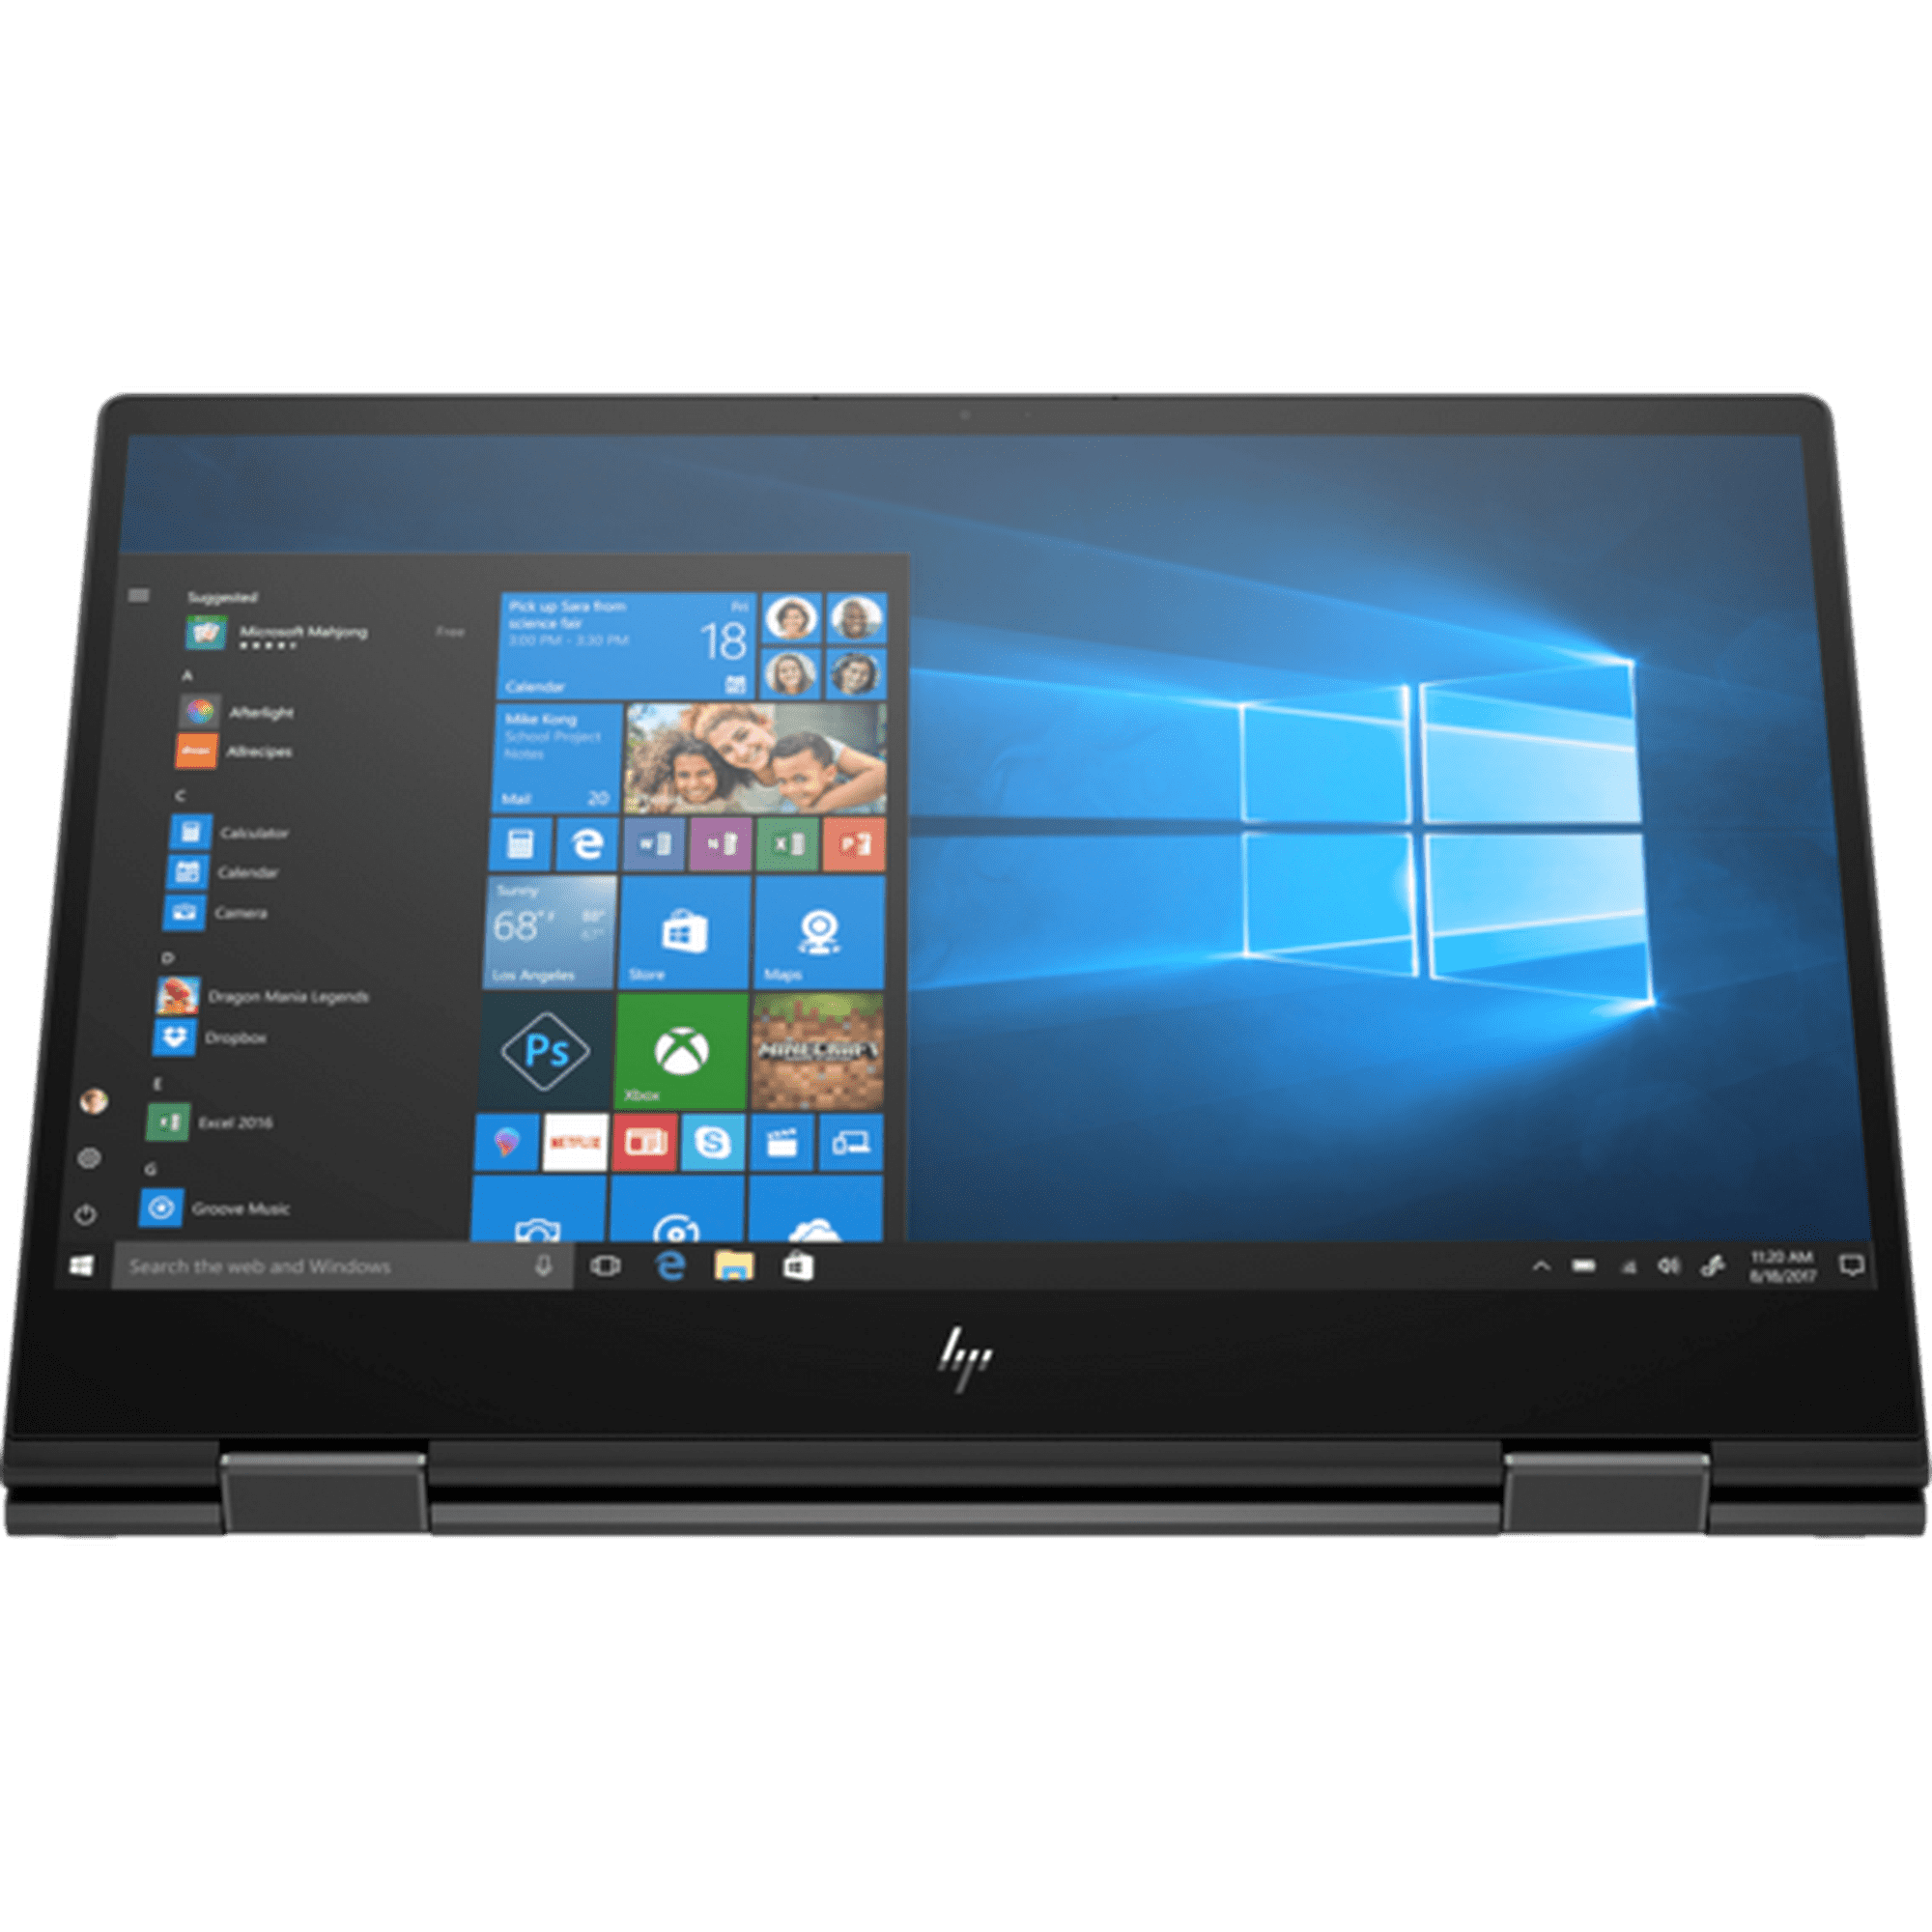 HP ENVY x360 - 15z Home and Business Laptop (AMD Ryzen 7 3700U 4